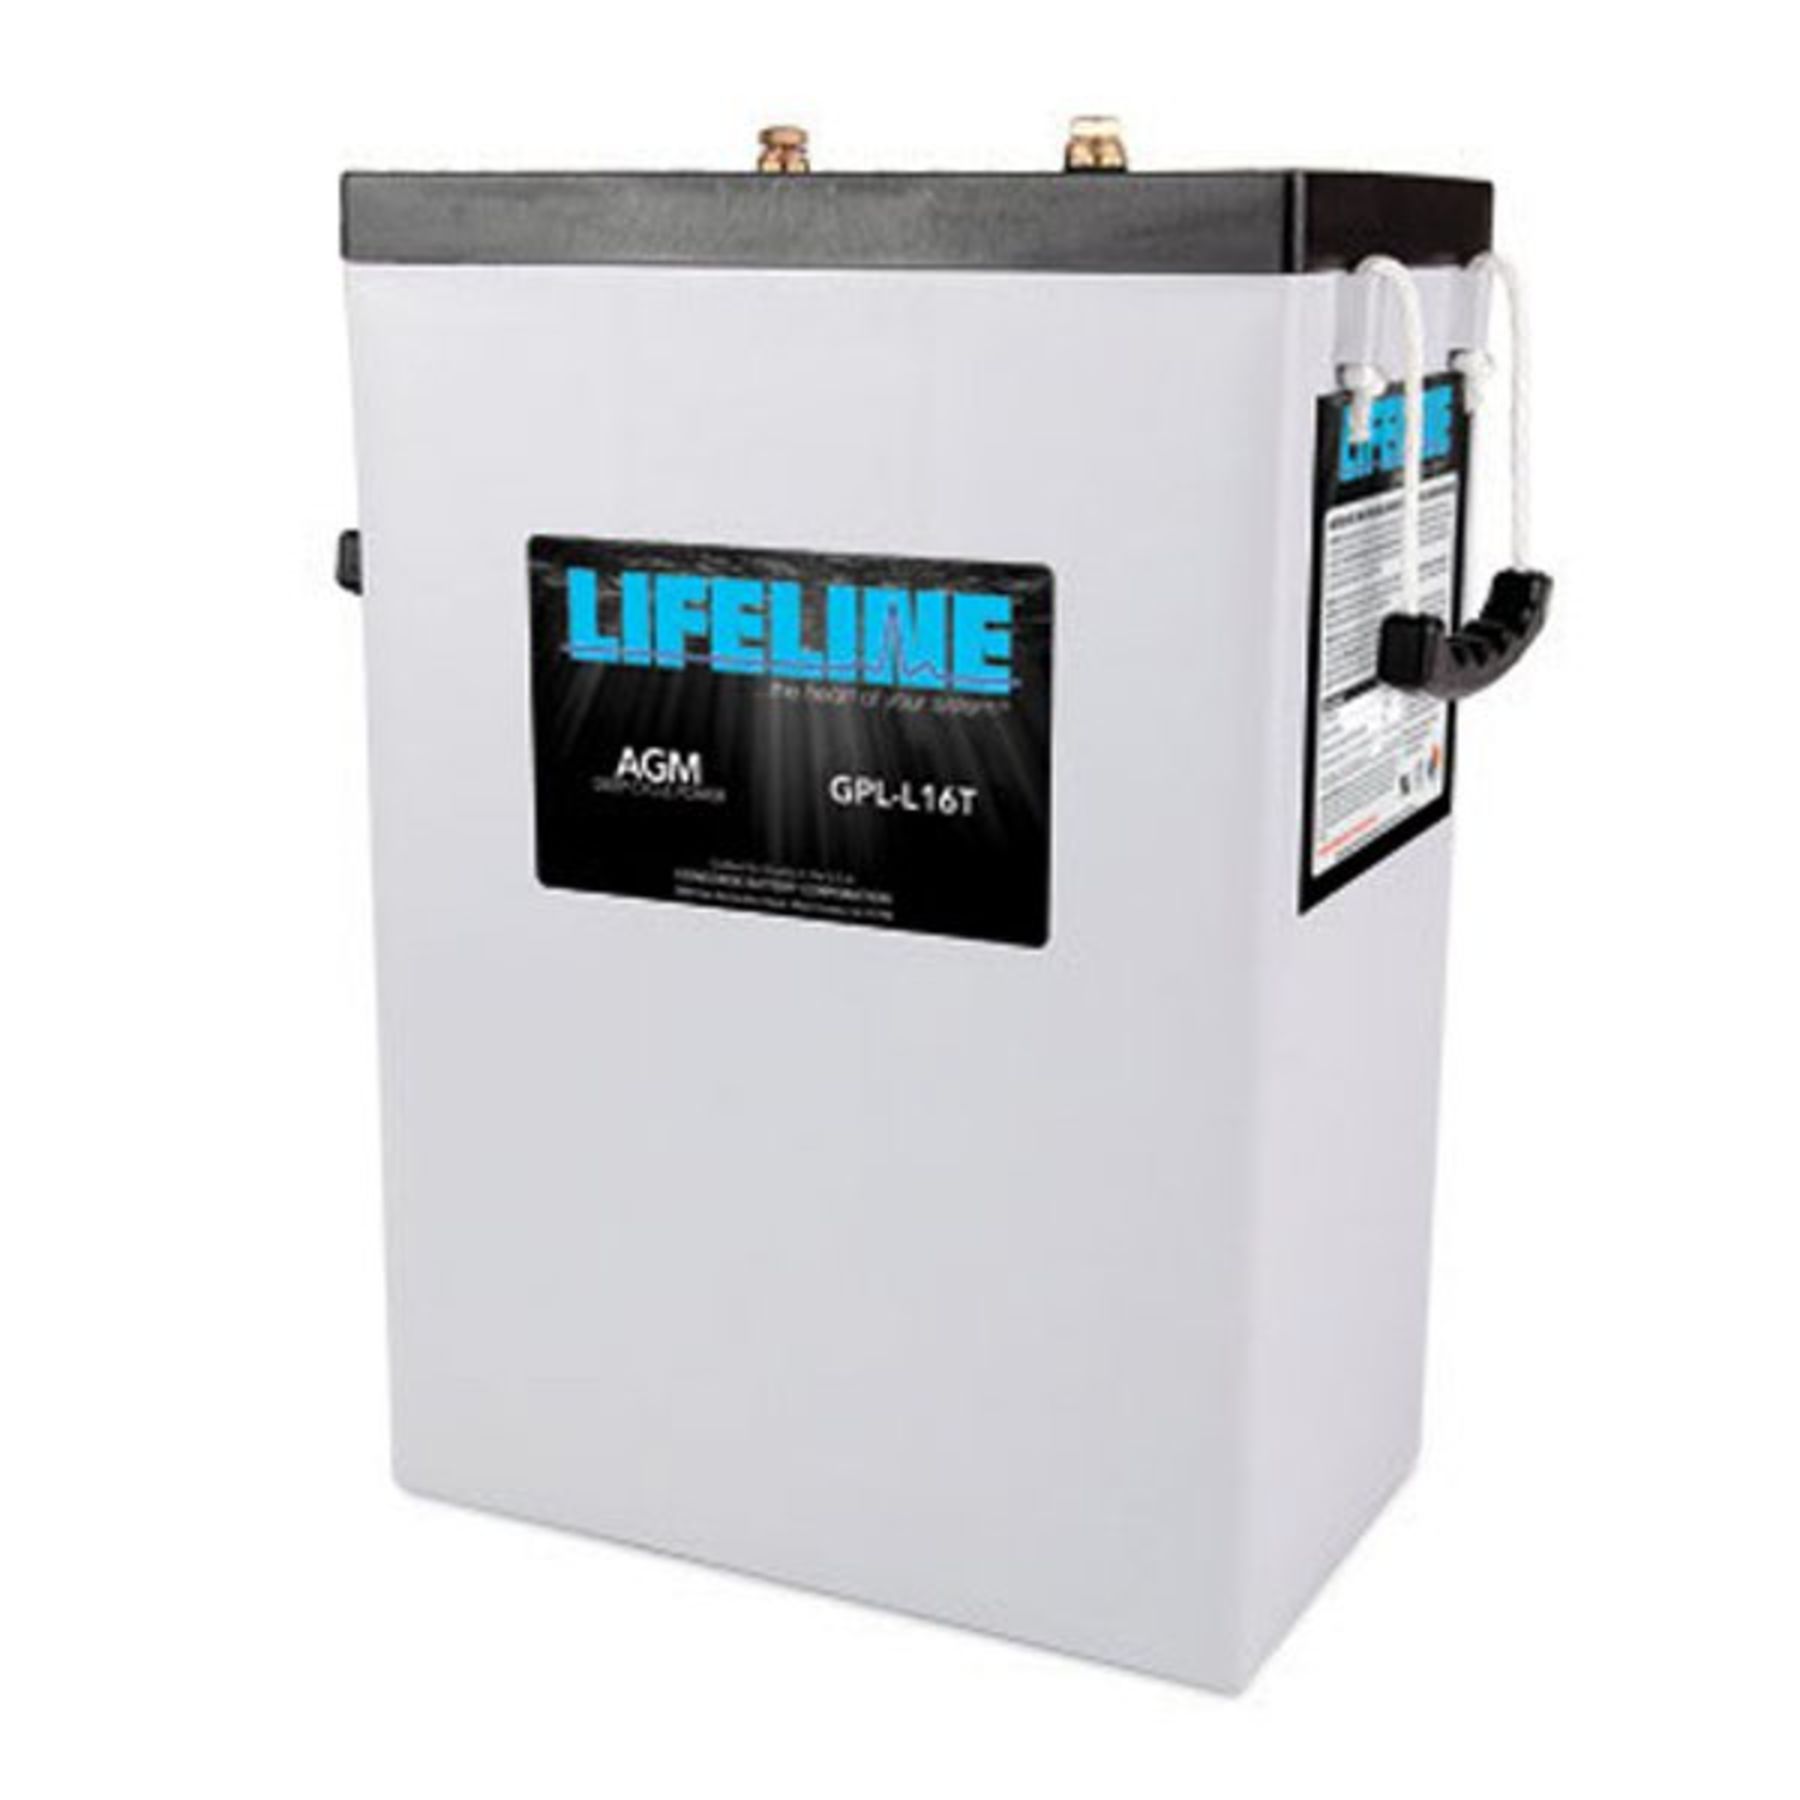 Lifeline 6v 400 AH Deep Cycle Sealed AGM Battery GPL-L16T